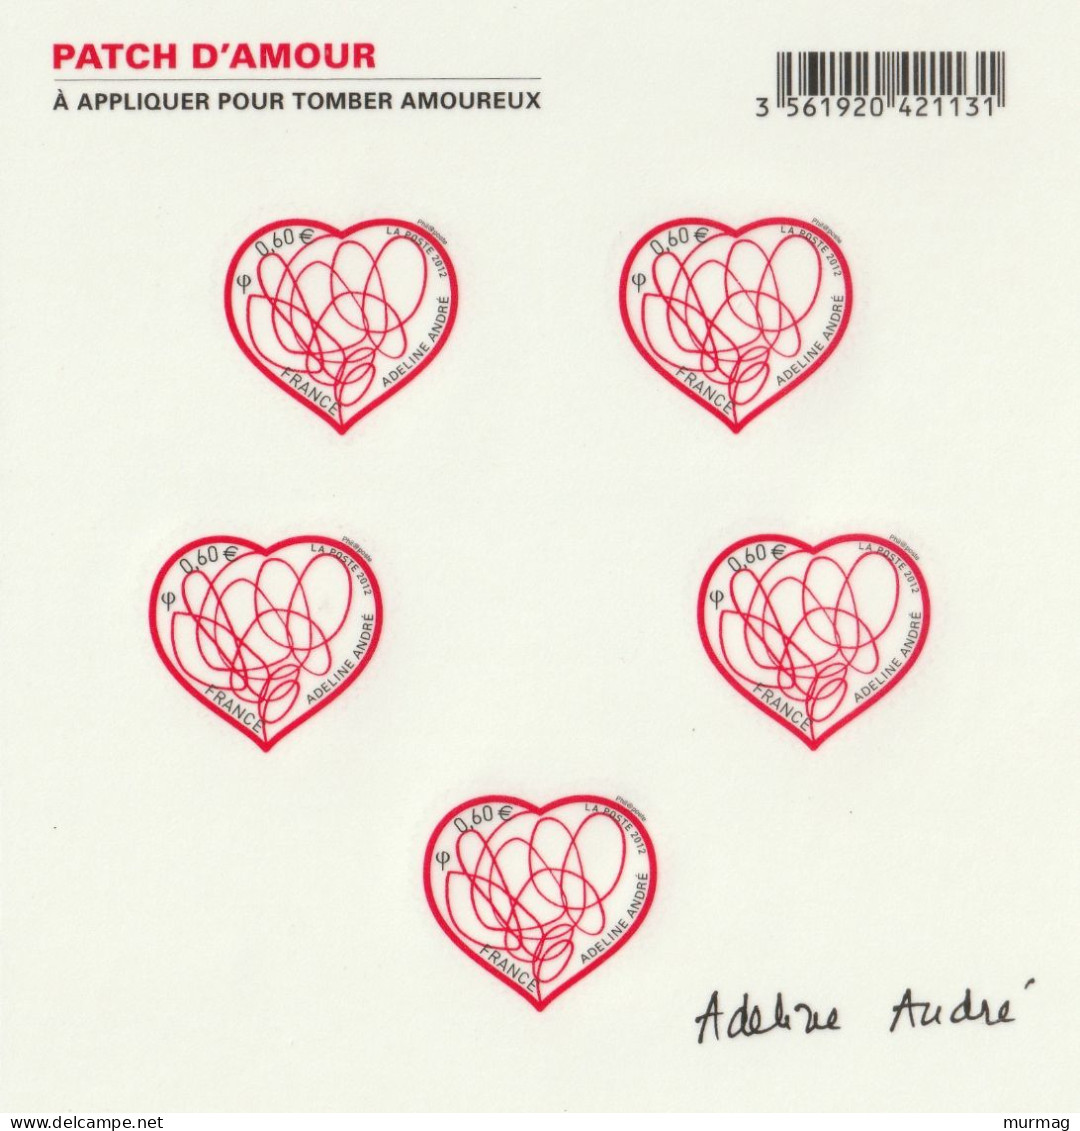 FRANCE - Patch D'amour, BF 648 Auto-adhésifs, Adeline - 2012 - MNH - Neufs